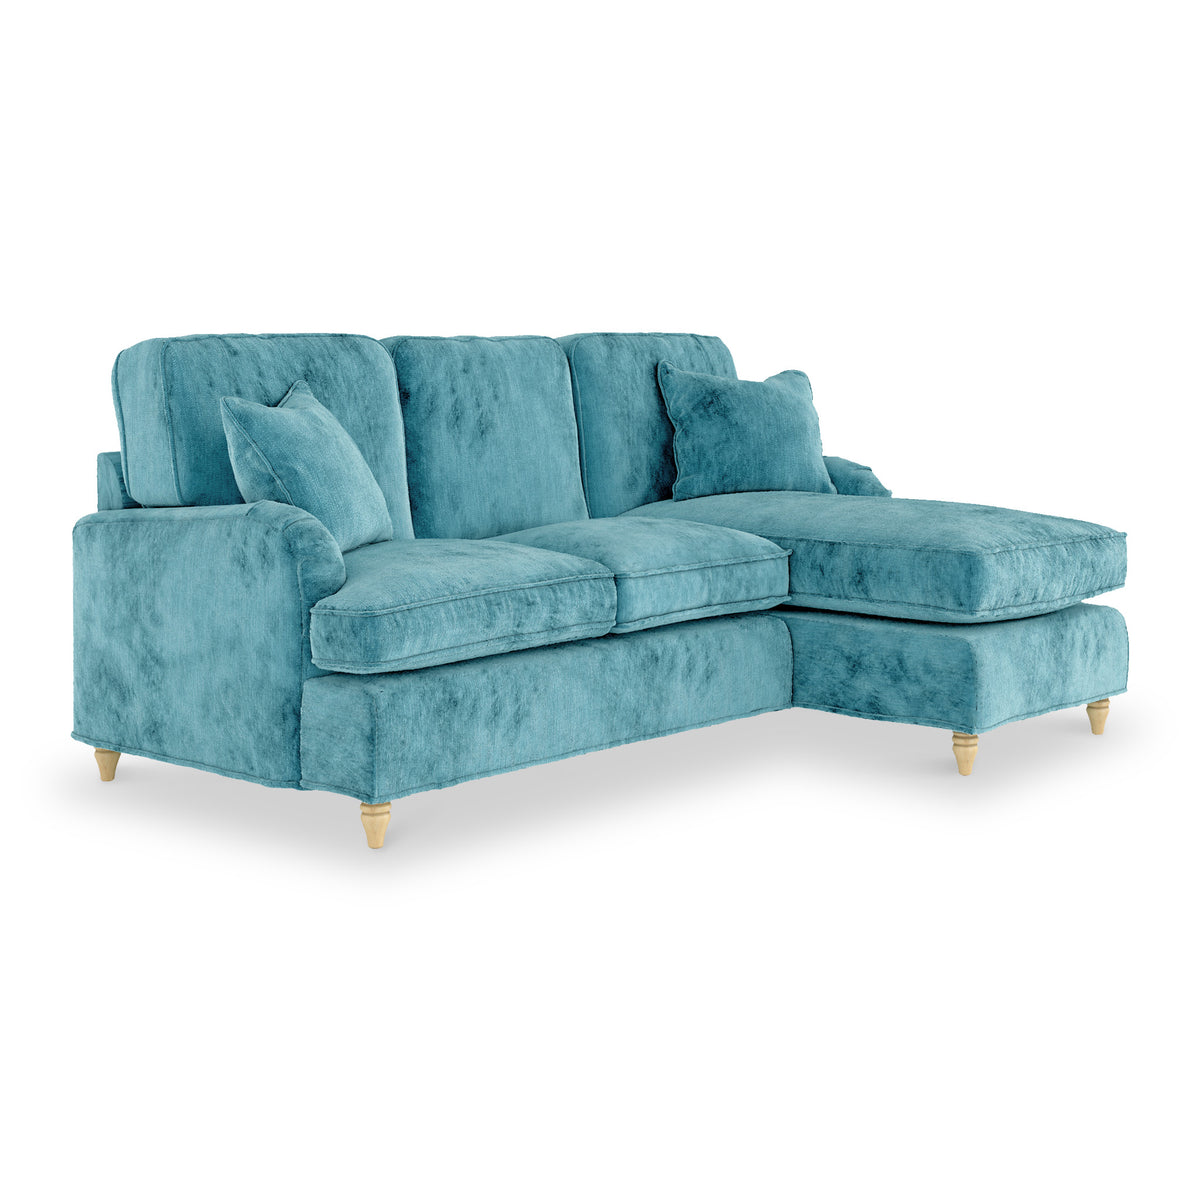 Arthur Lagoon RH Chaise Sofa from Roseland Furniture